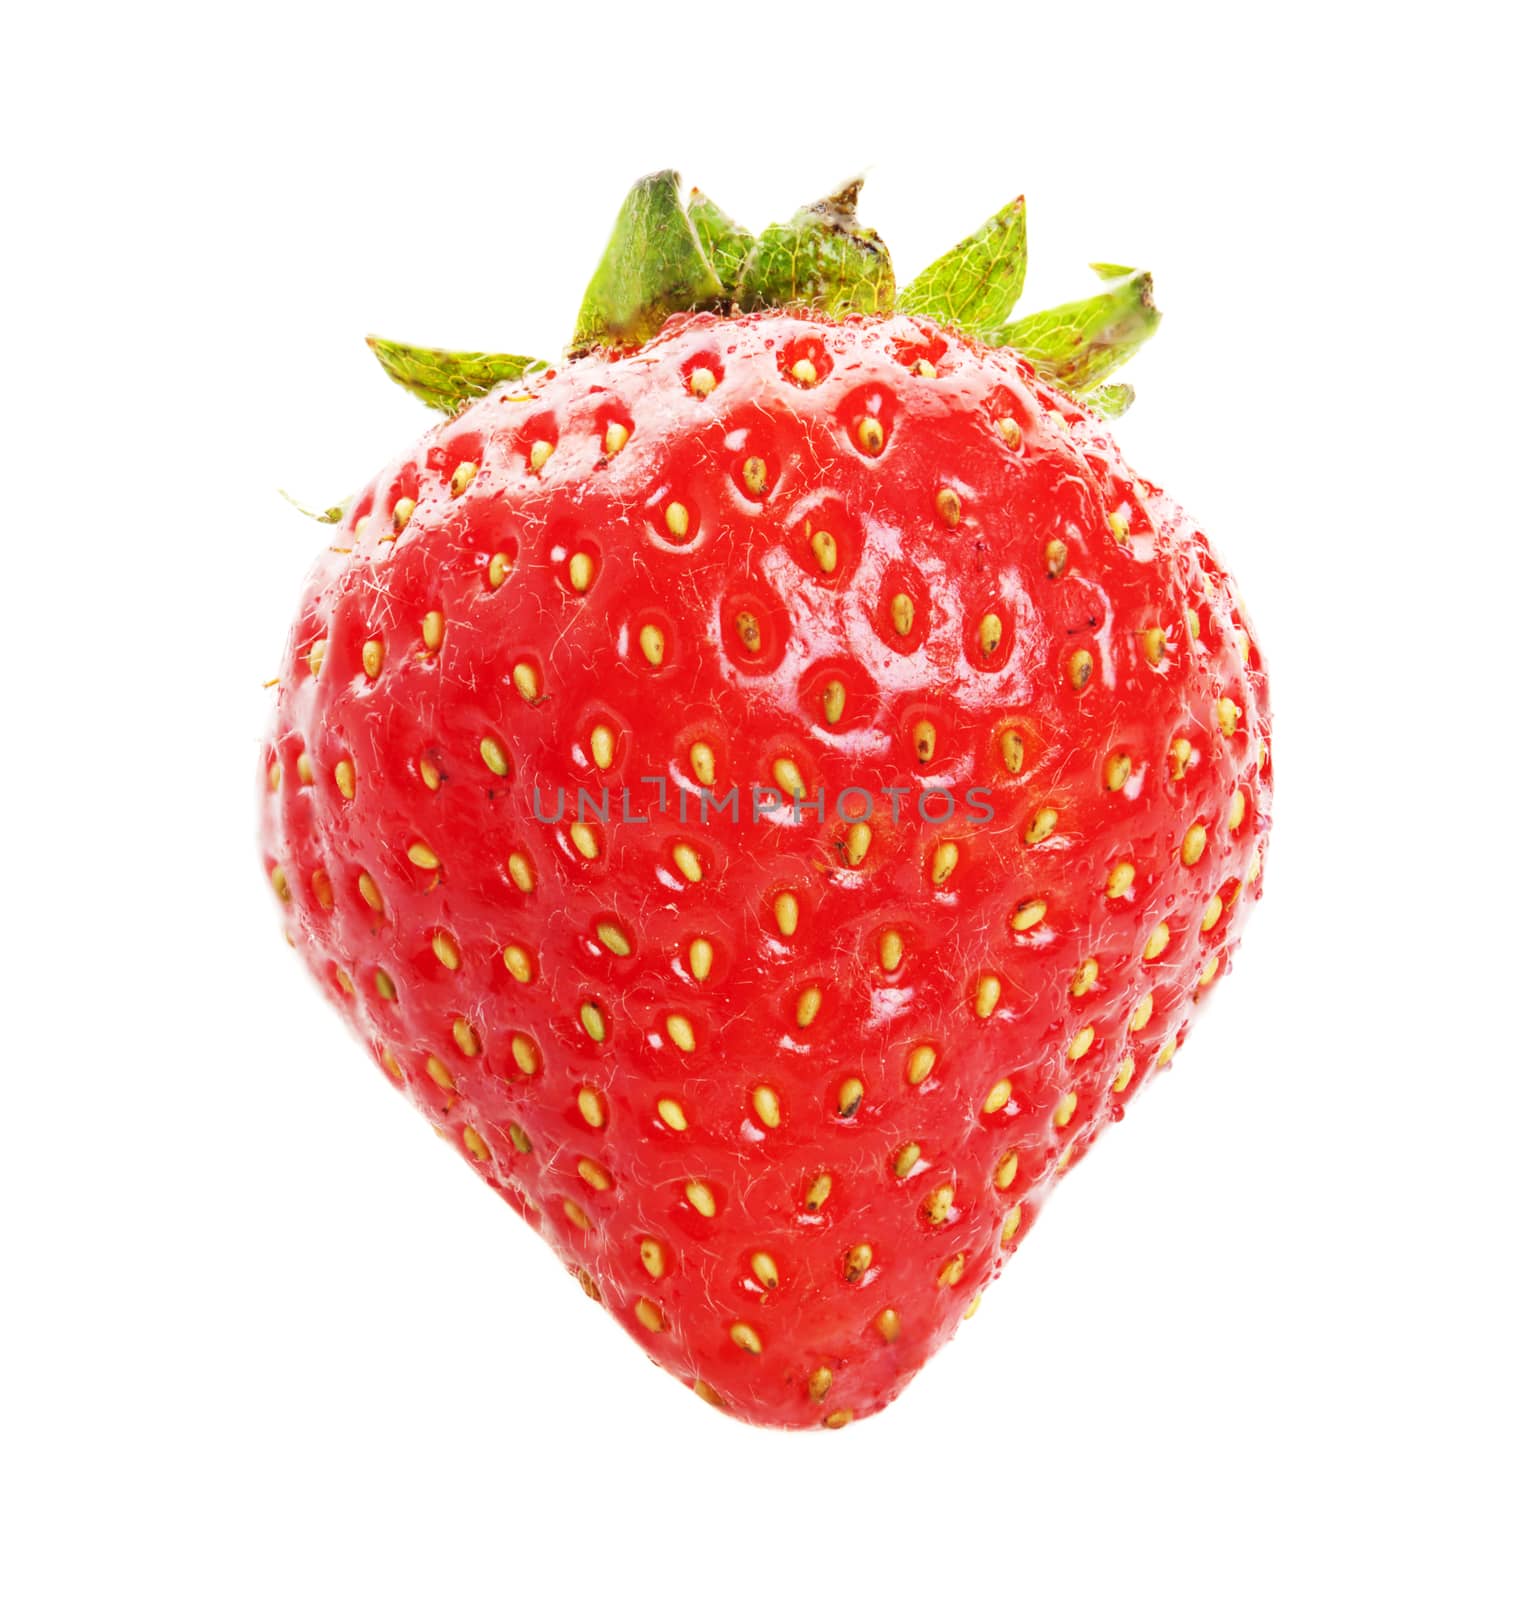 One juicy, organic strawberry.  Shot on a white background.